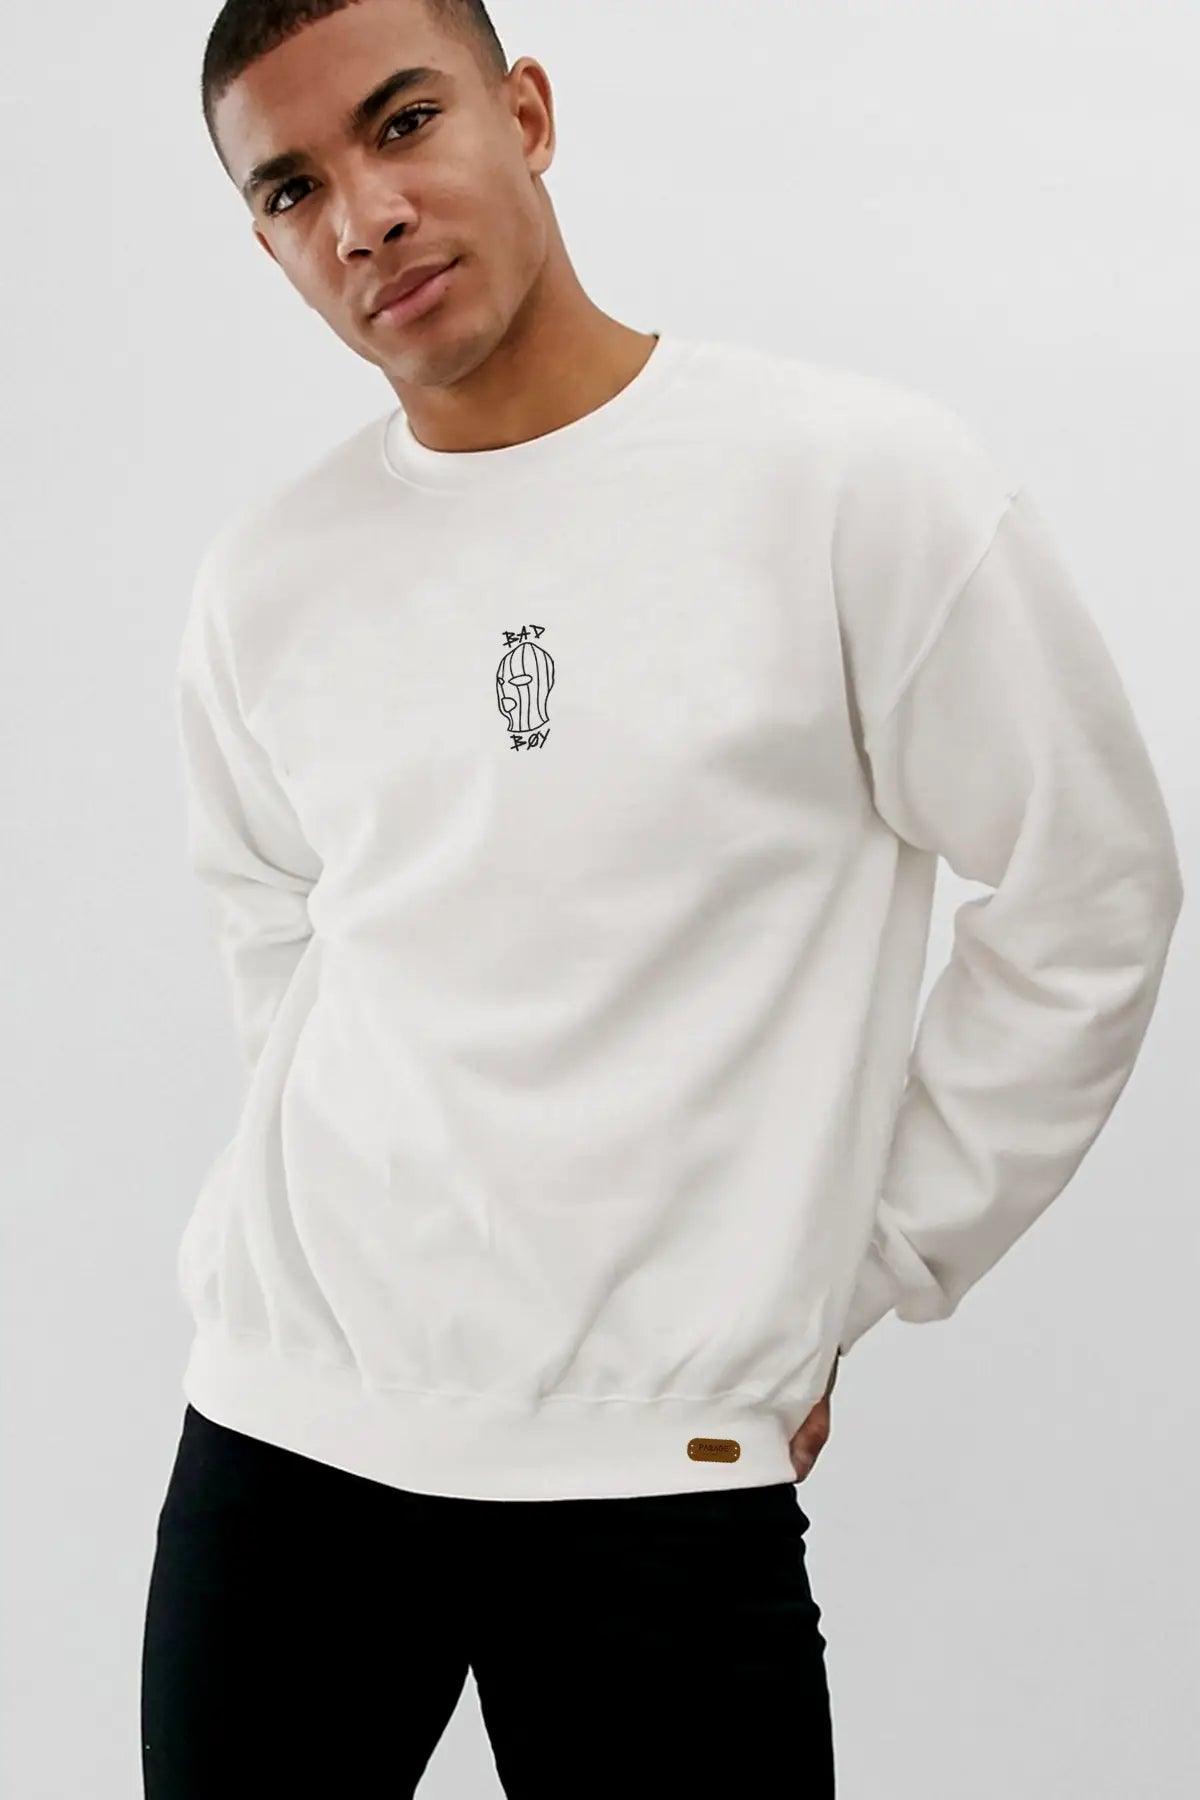 Bad Boy Oversize Erkek Sweatshirt - PΛSΛGE